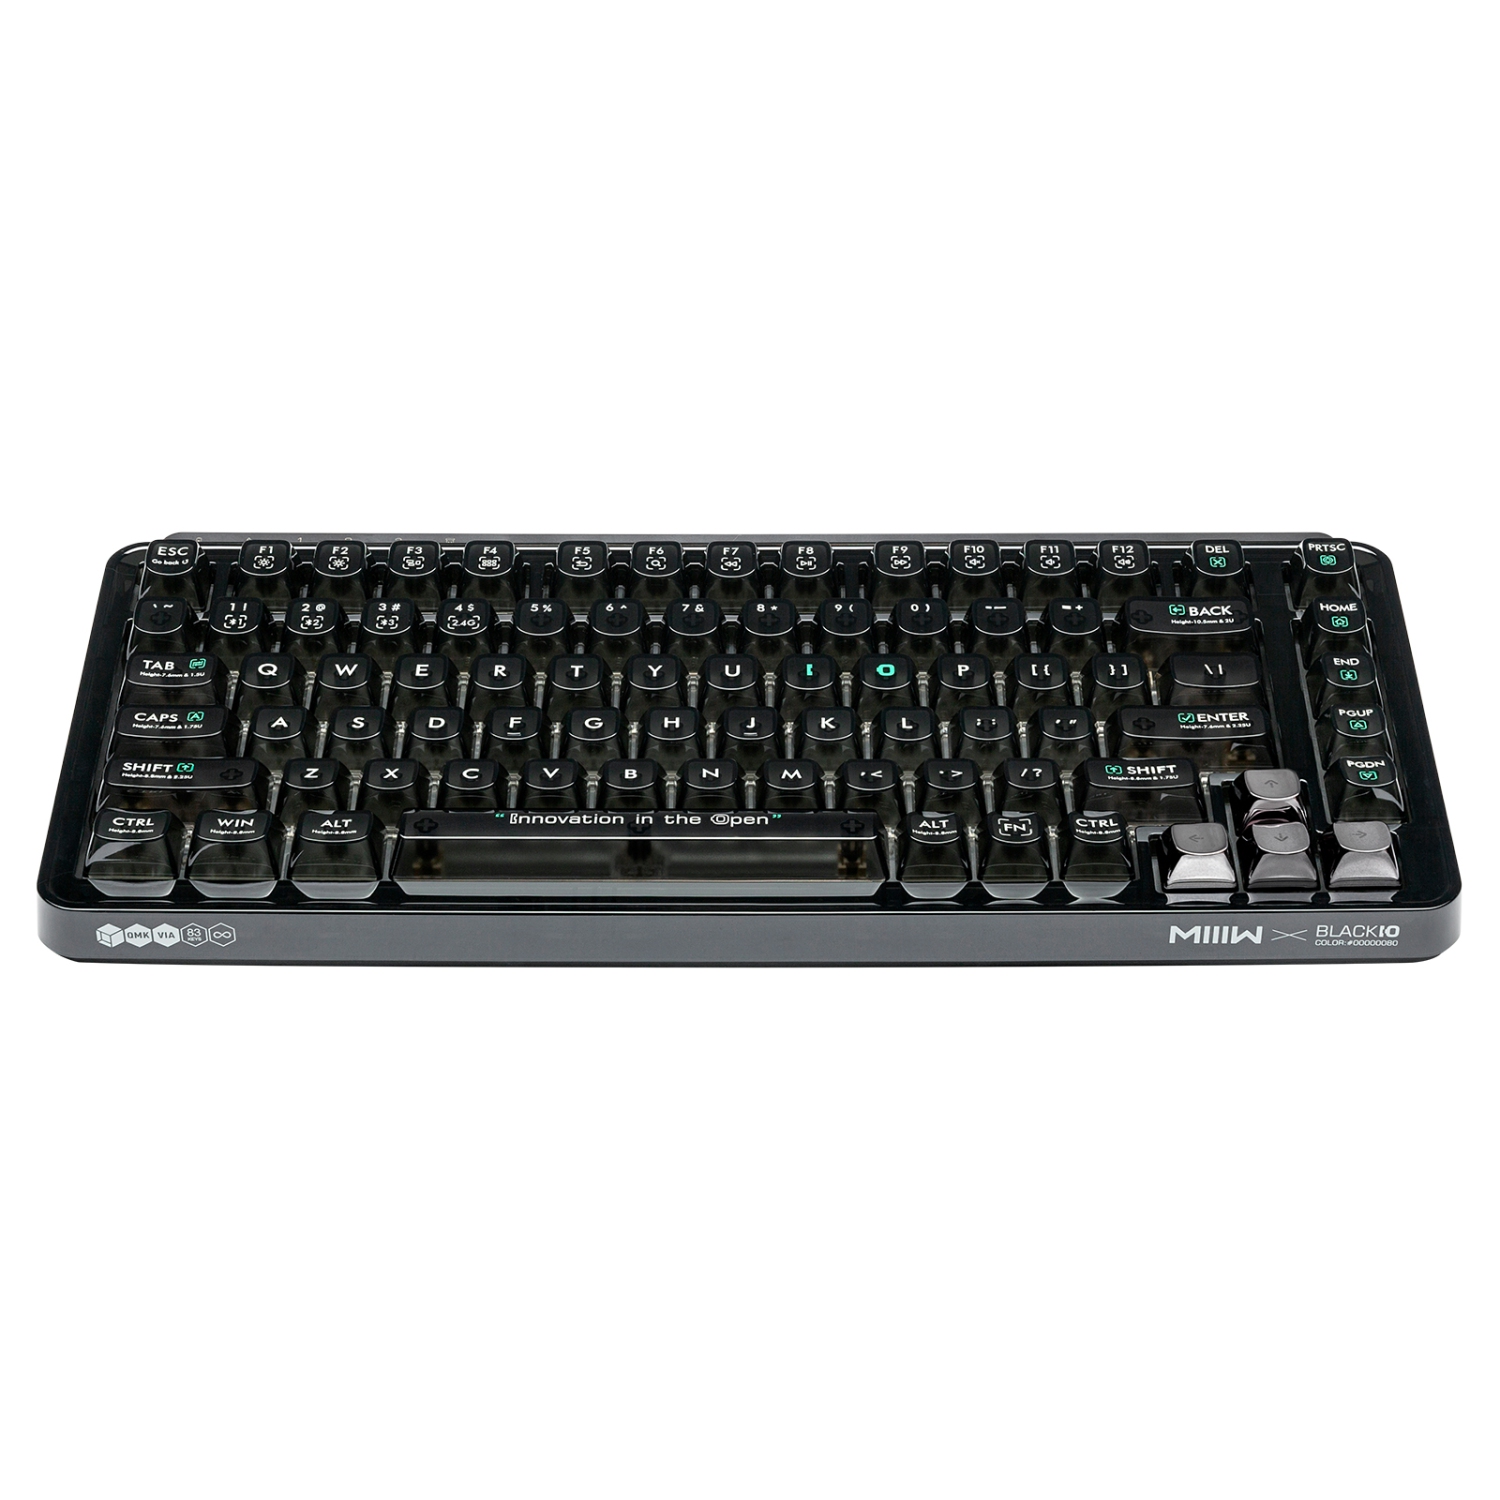 XIAOMI MIIIW BLACK IO 83 Keys Custom Mechanical Gaming Keyboard, Space Silver